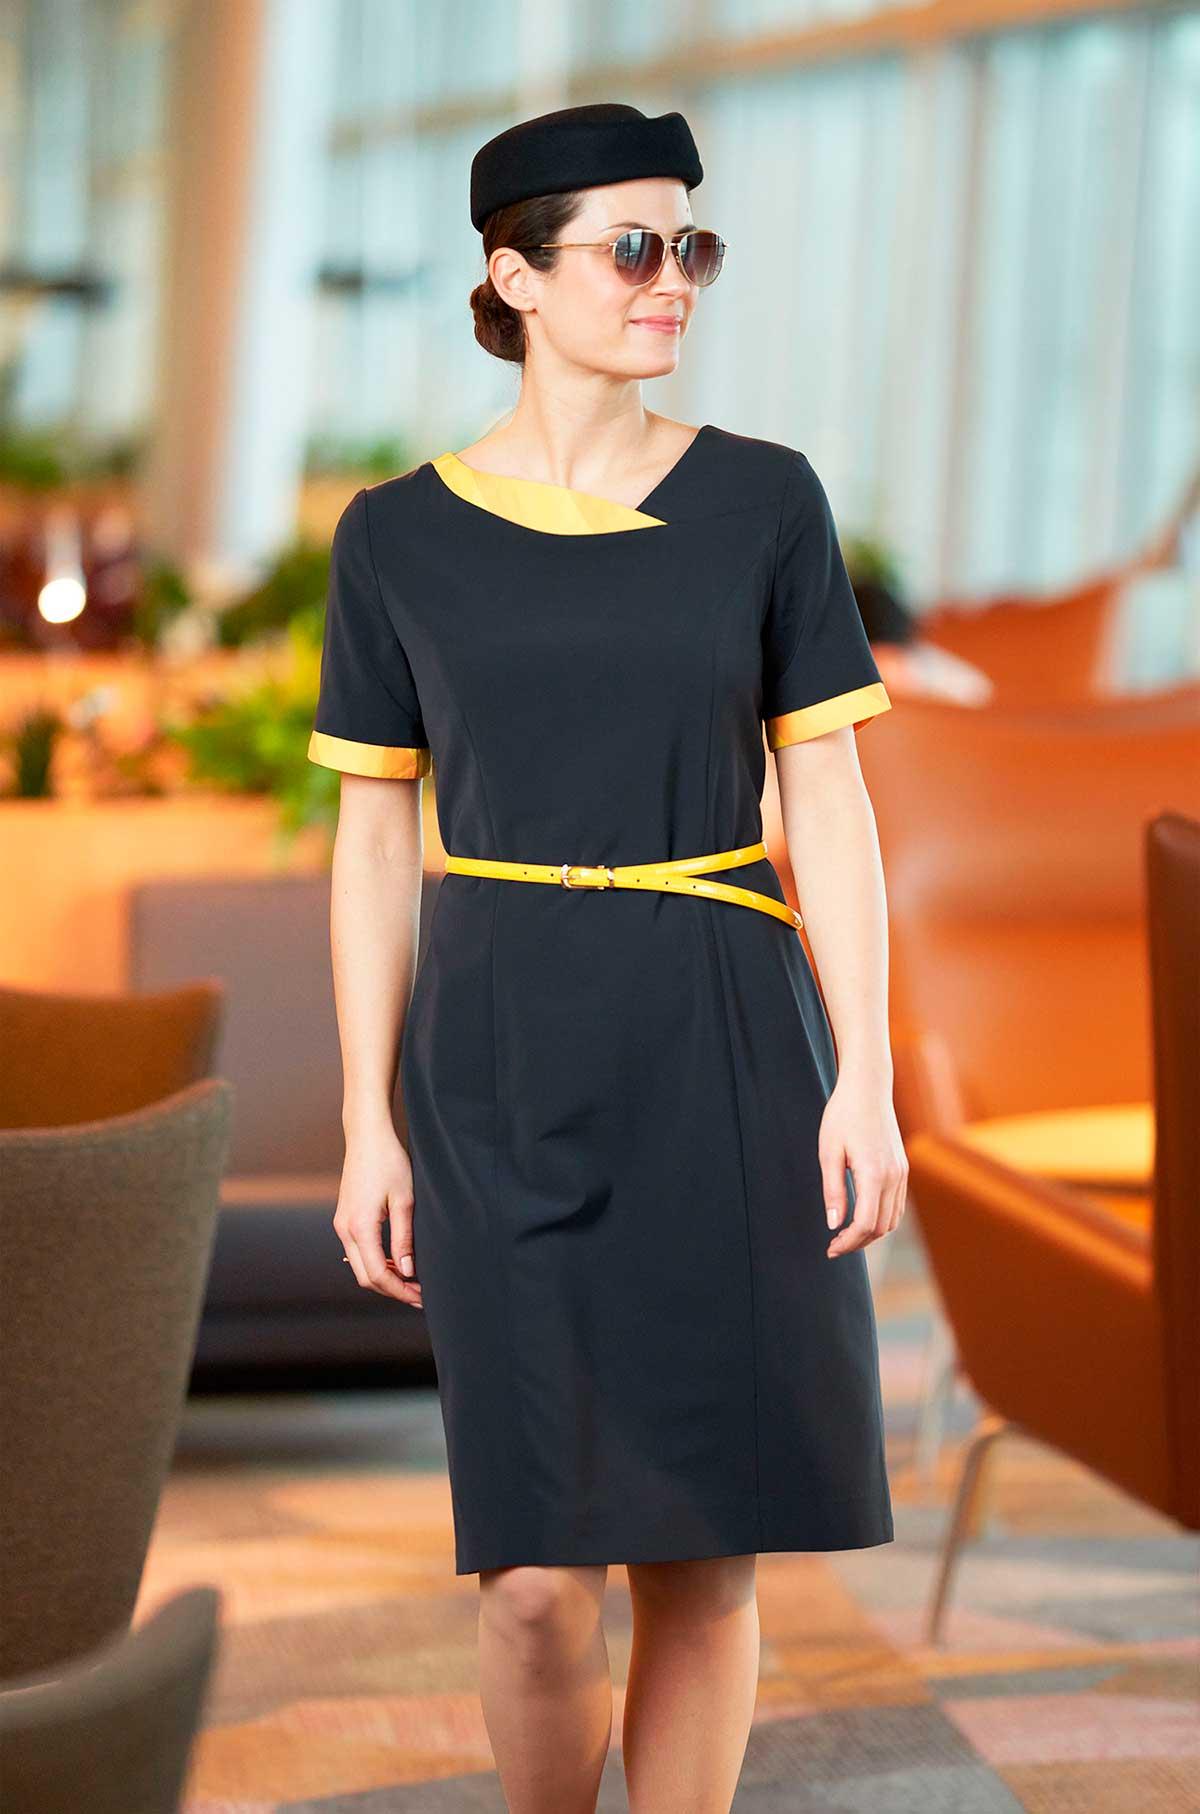 Flight attendant dress - Premium made-to-fit uniforms - Olino